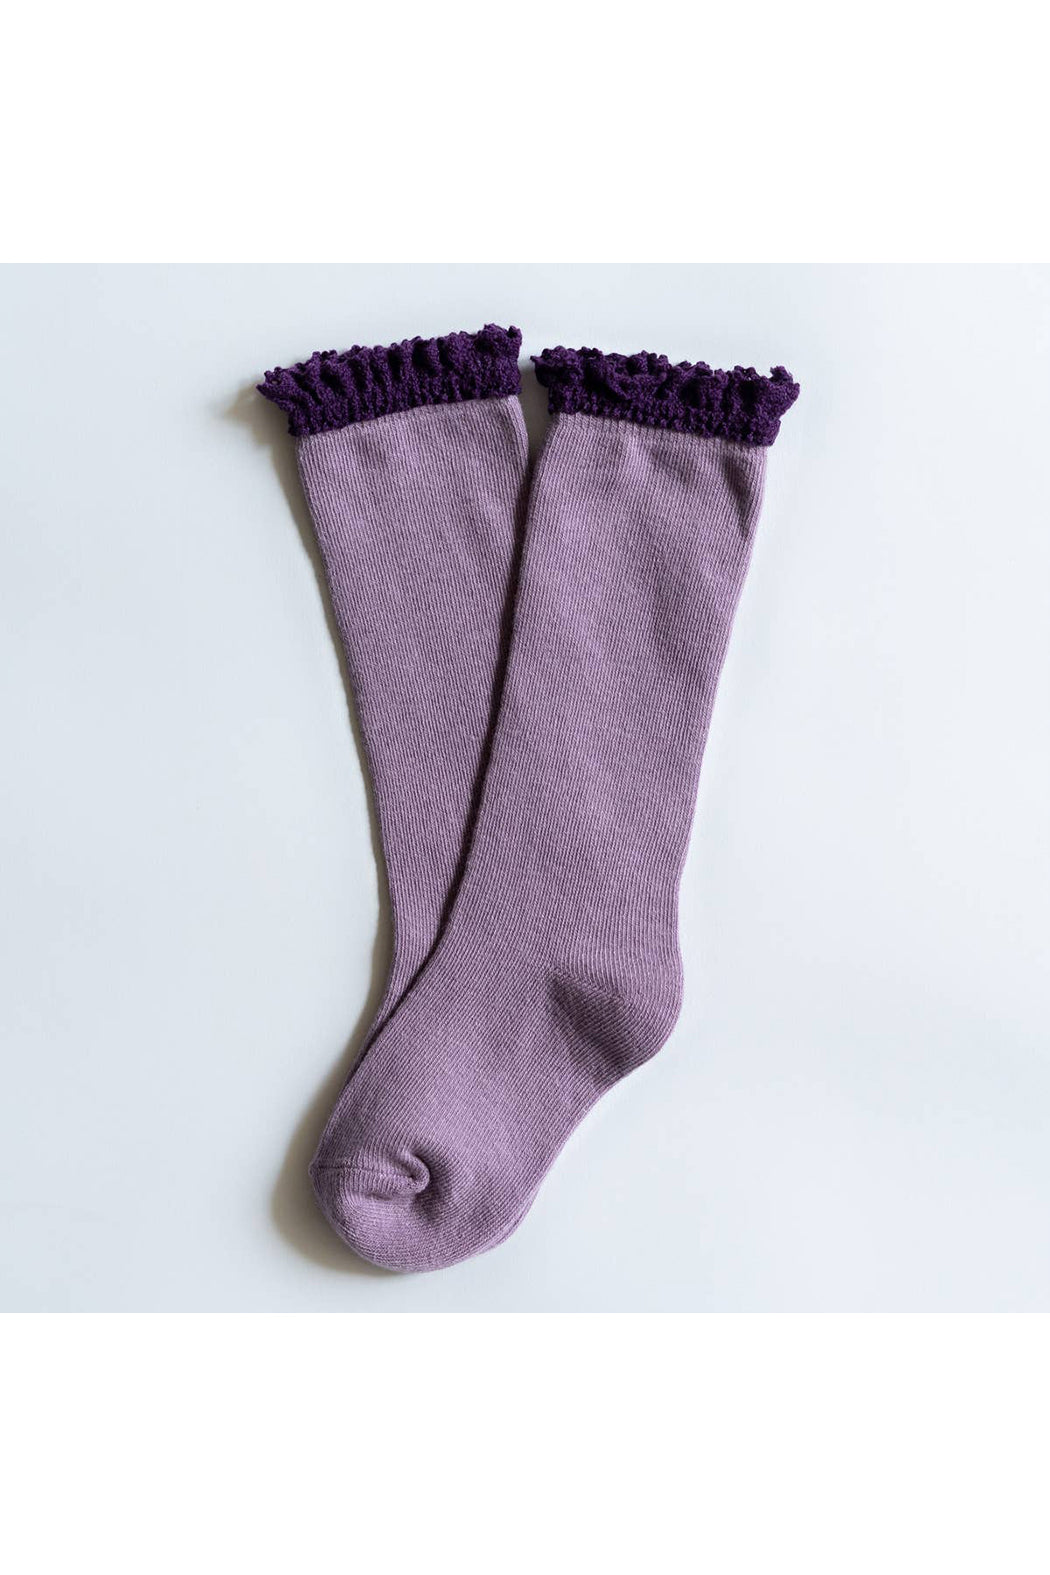 Little Stocking Co Purple + Plum Lace Top Knee High Socks